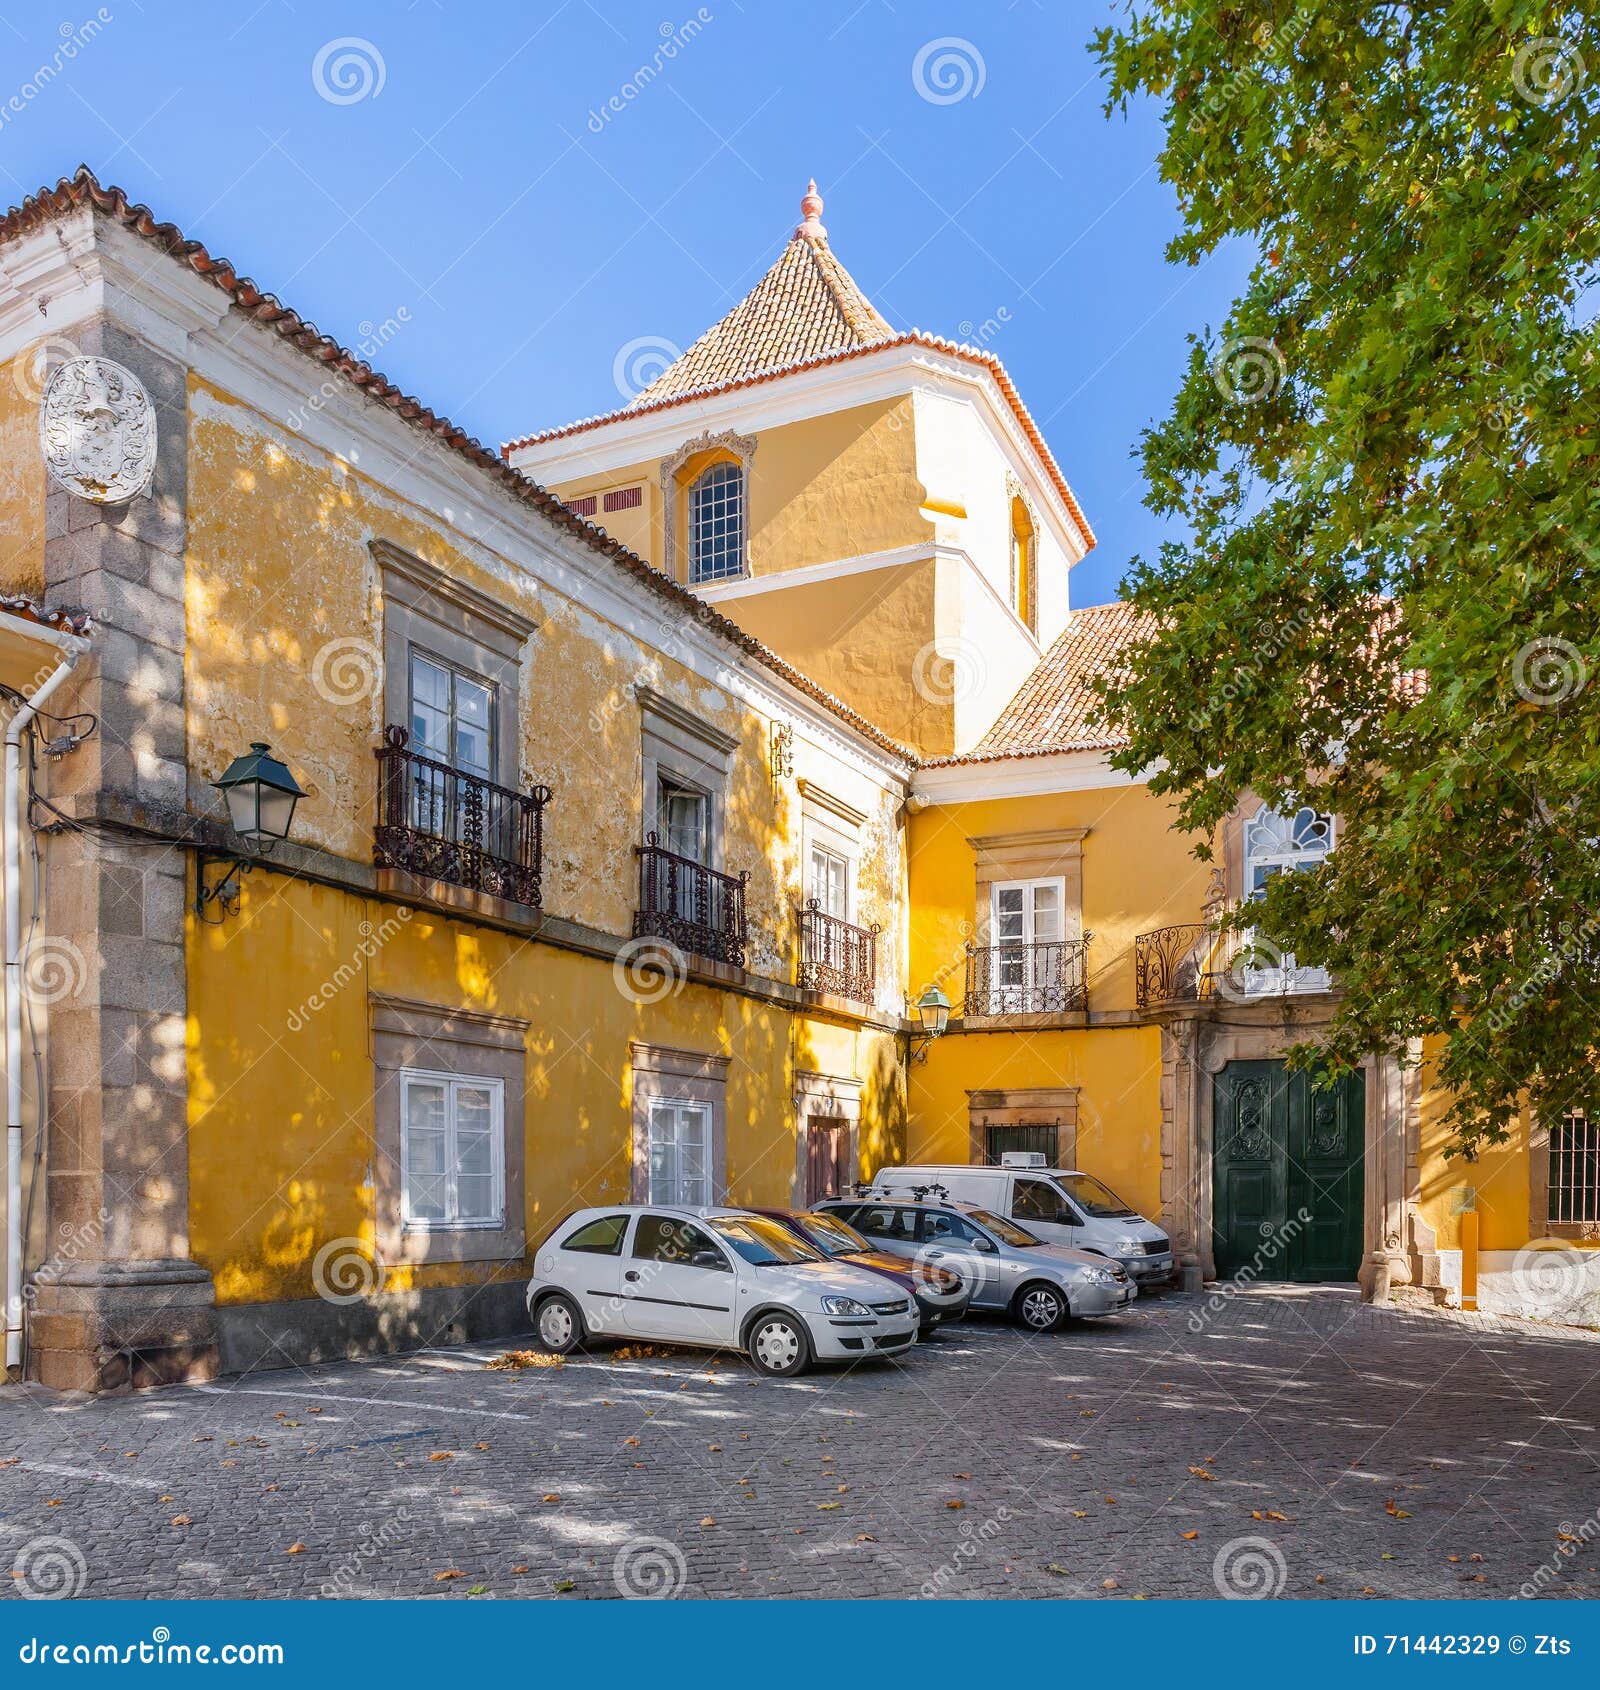 amarelo palace in portalegre city